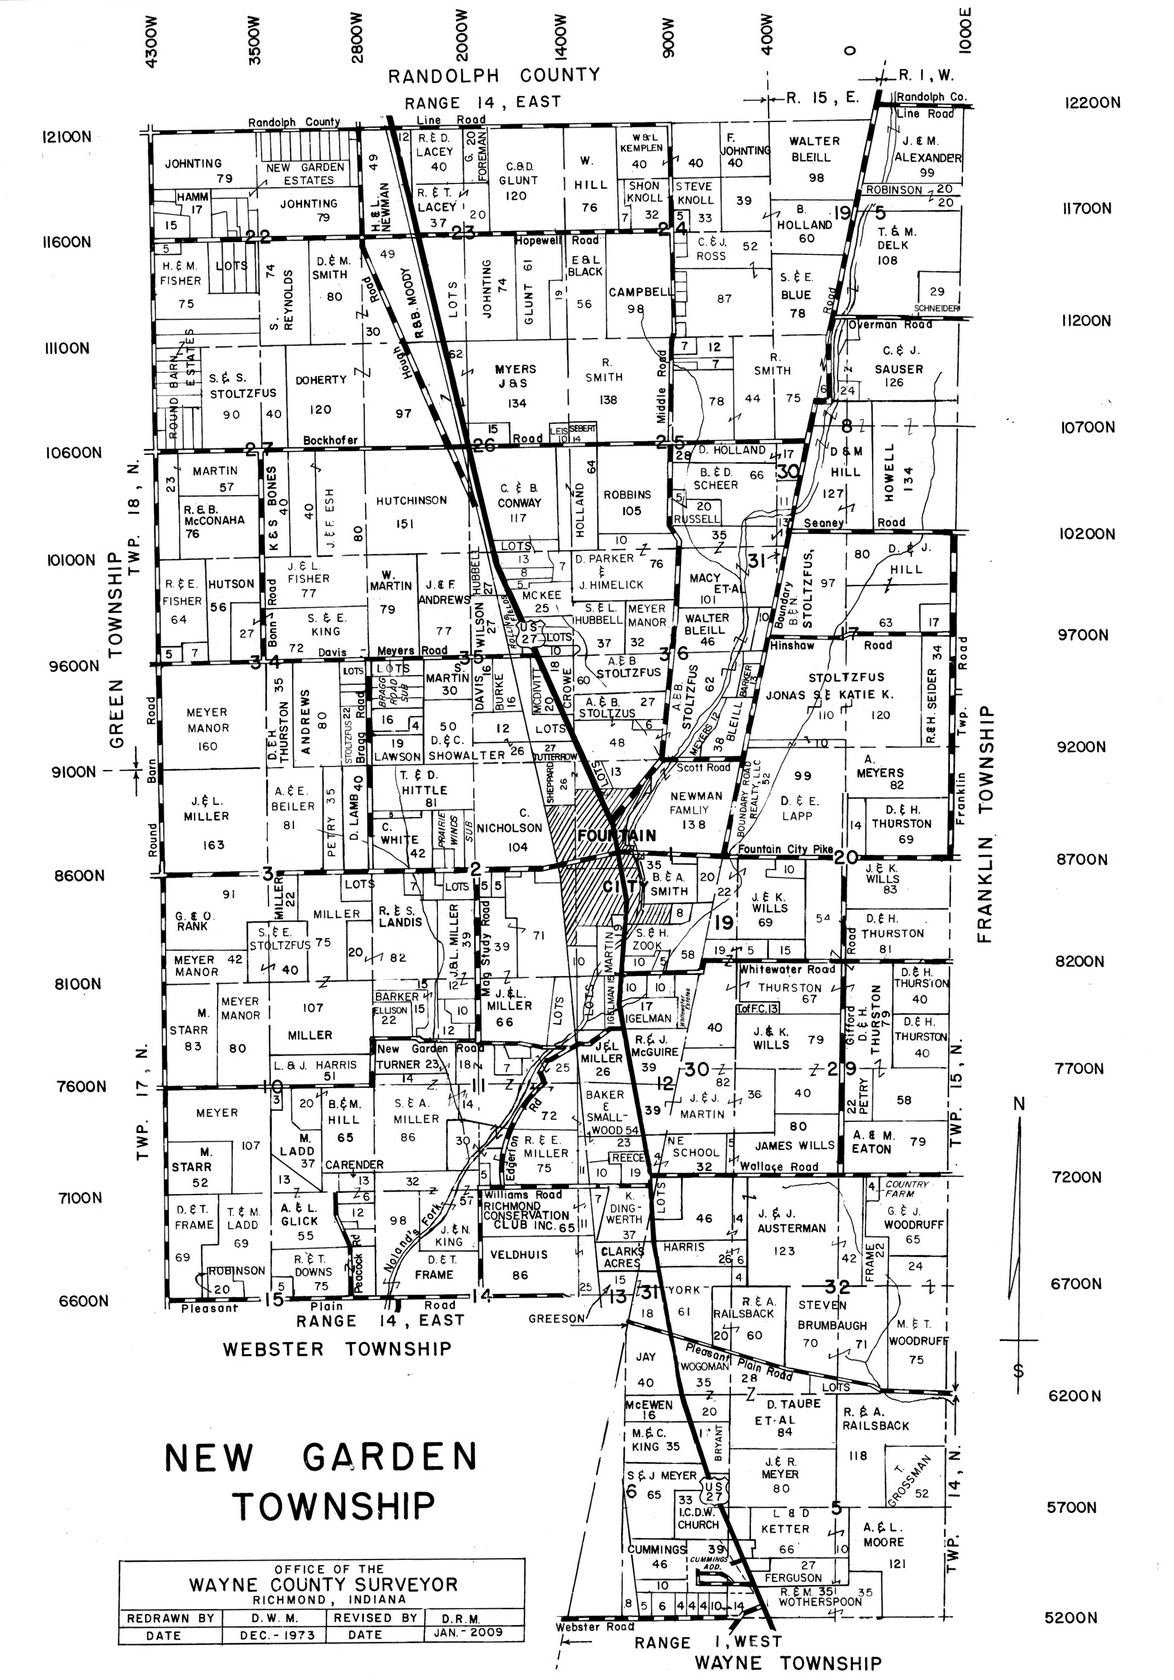 Map of New Garden Township, Wayne County, Indiana